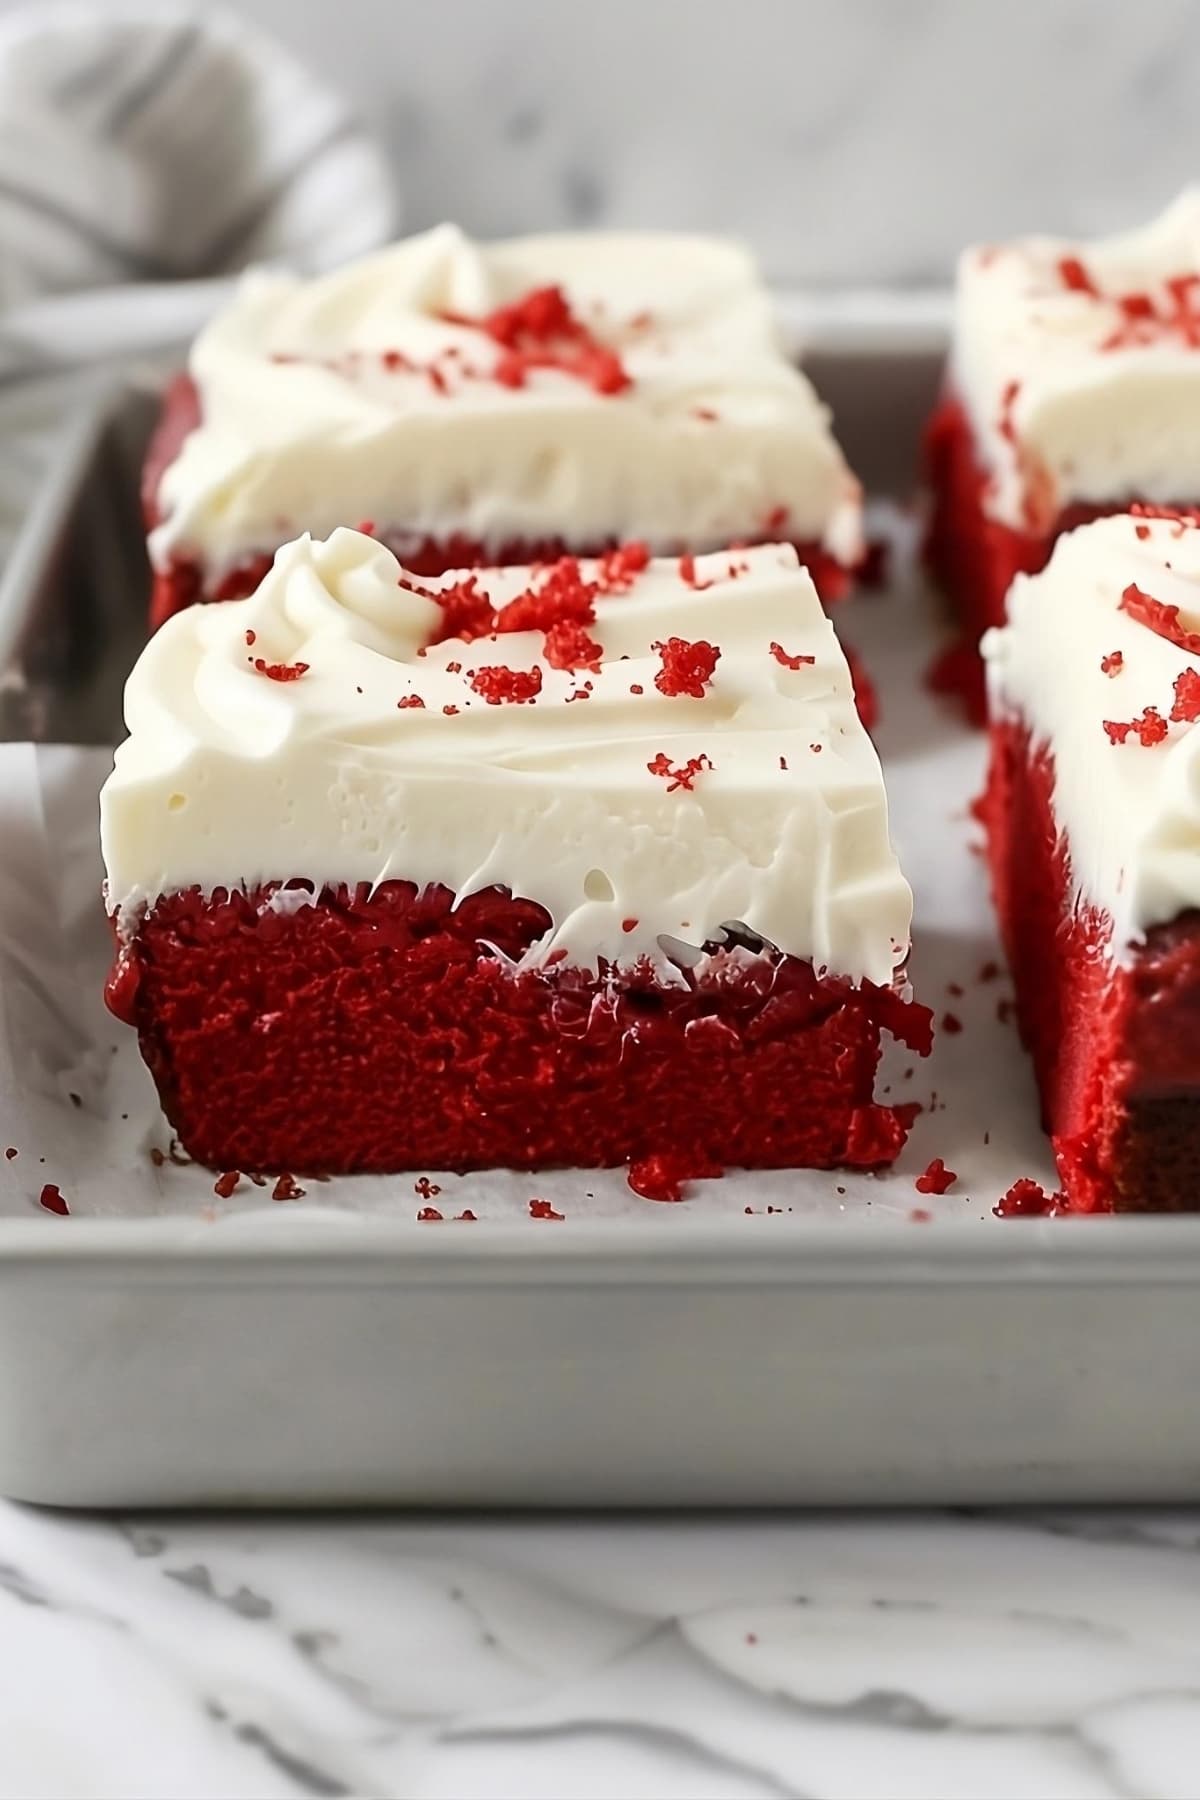 Square slices of red velvet sheet cake in a baking pan.